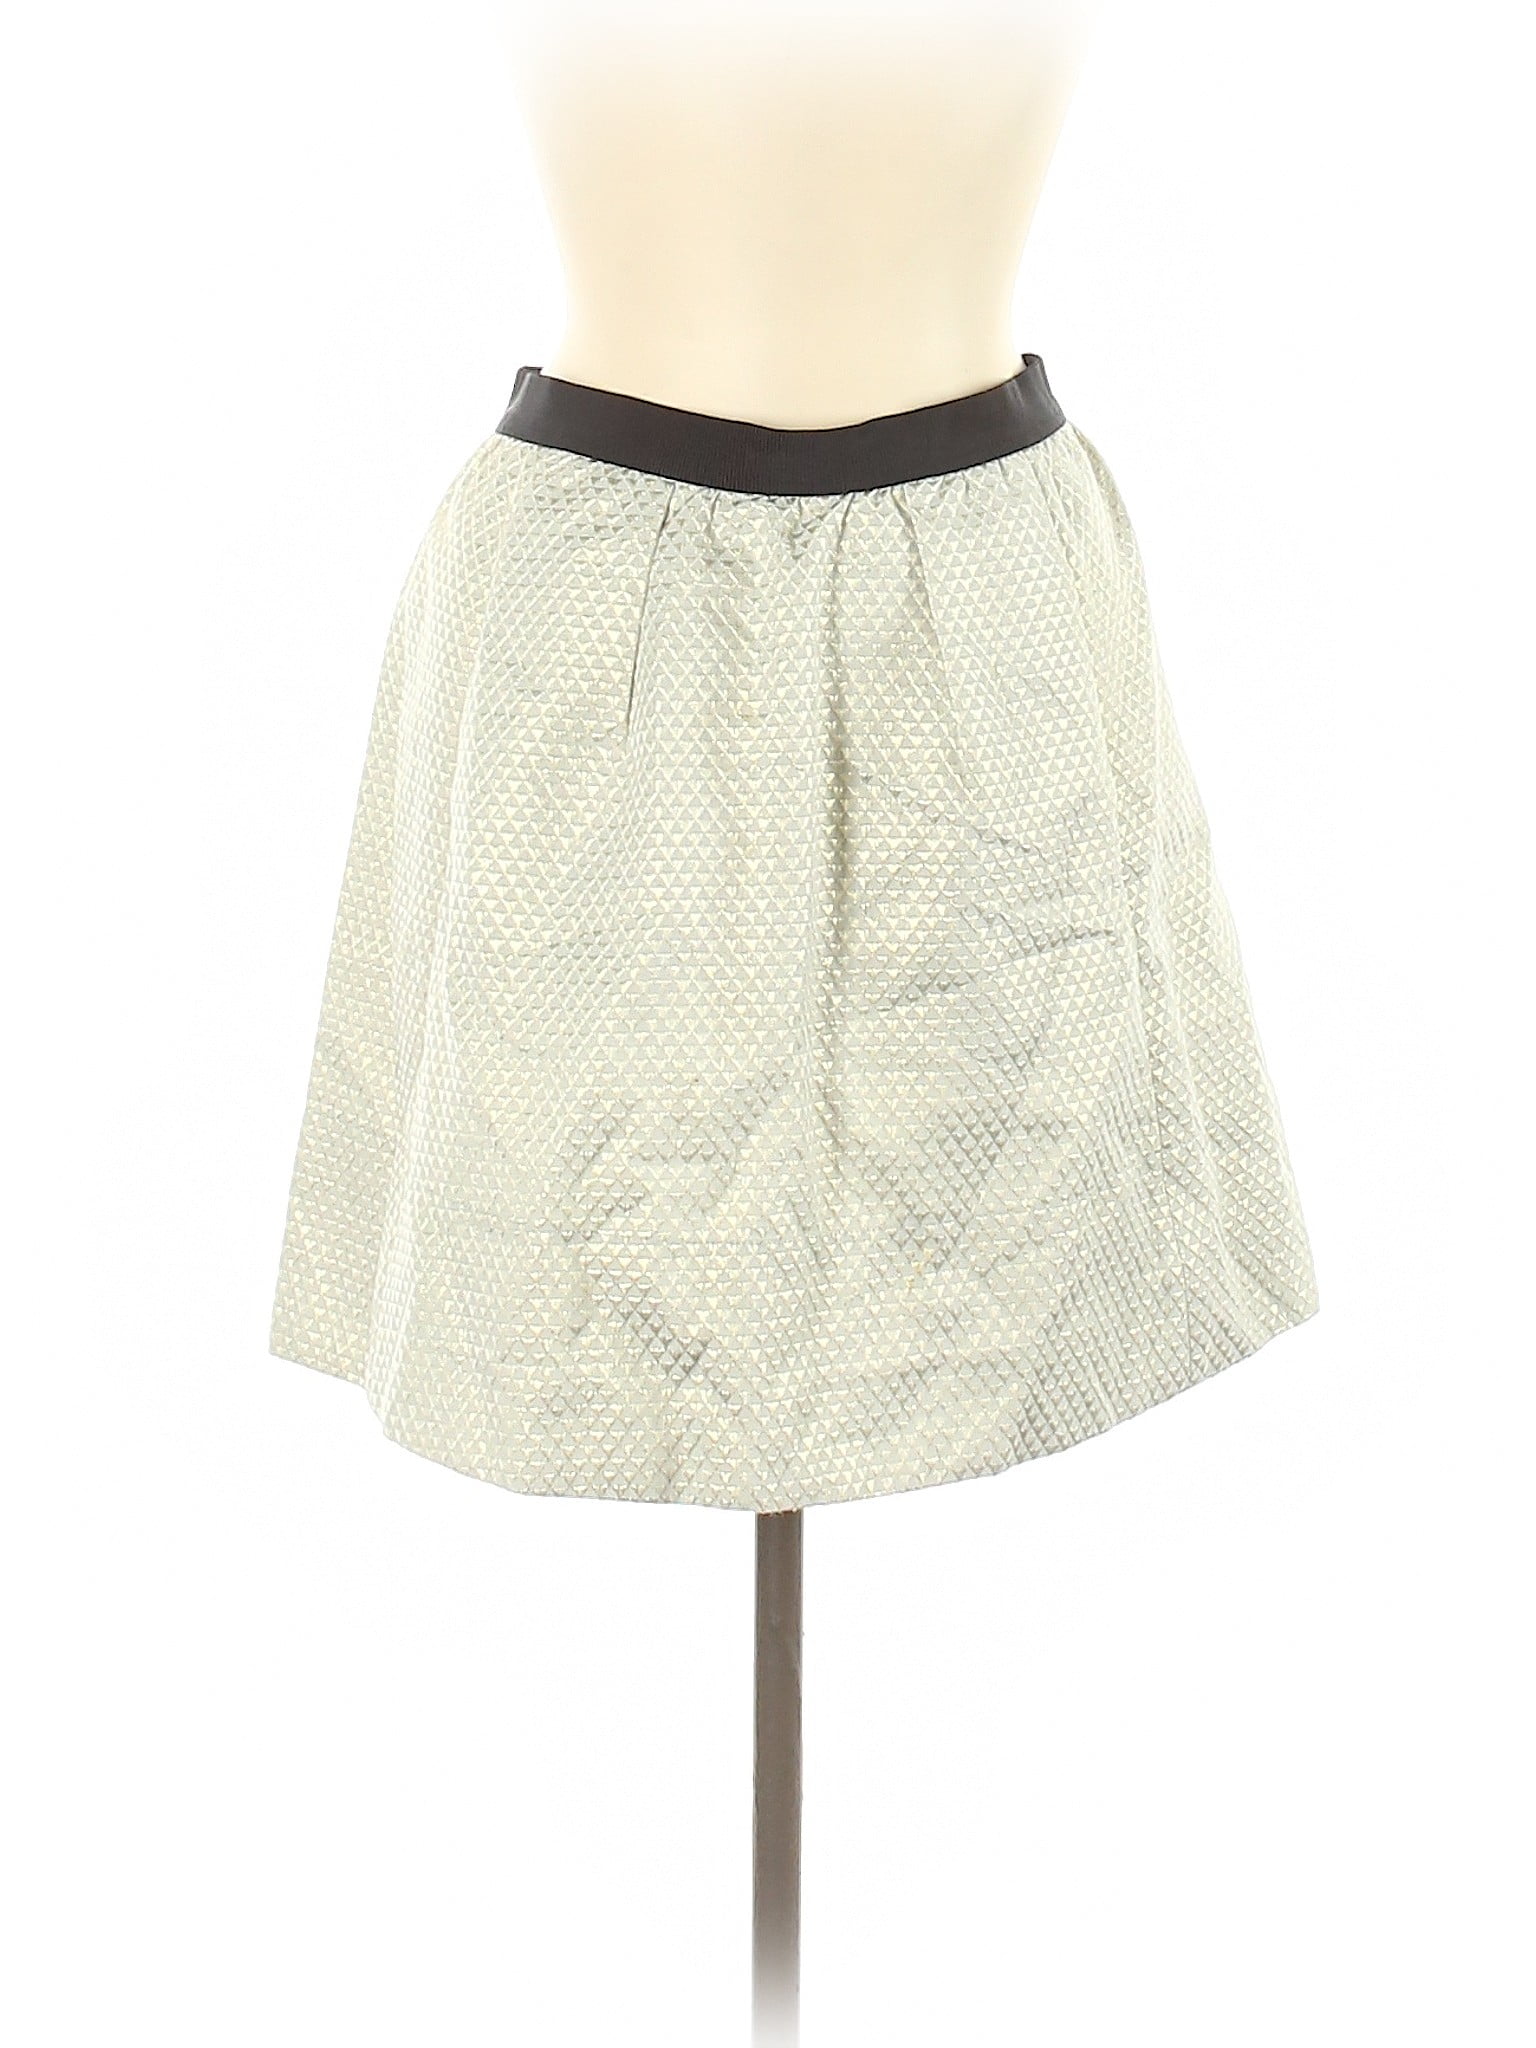 Ganni - Pre-Owned Ganni Women's Size S Casual Skirt - Walmart.com ...